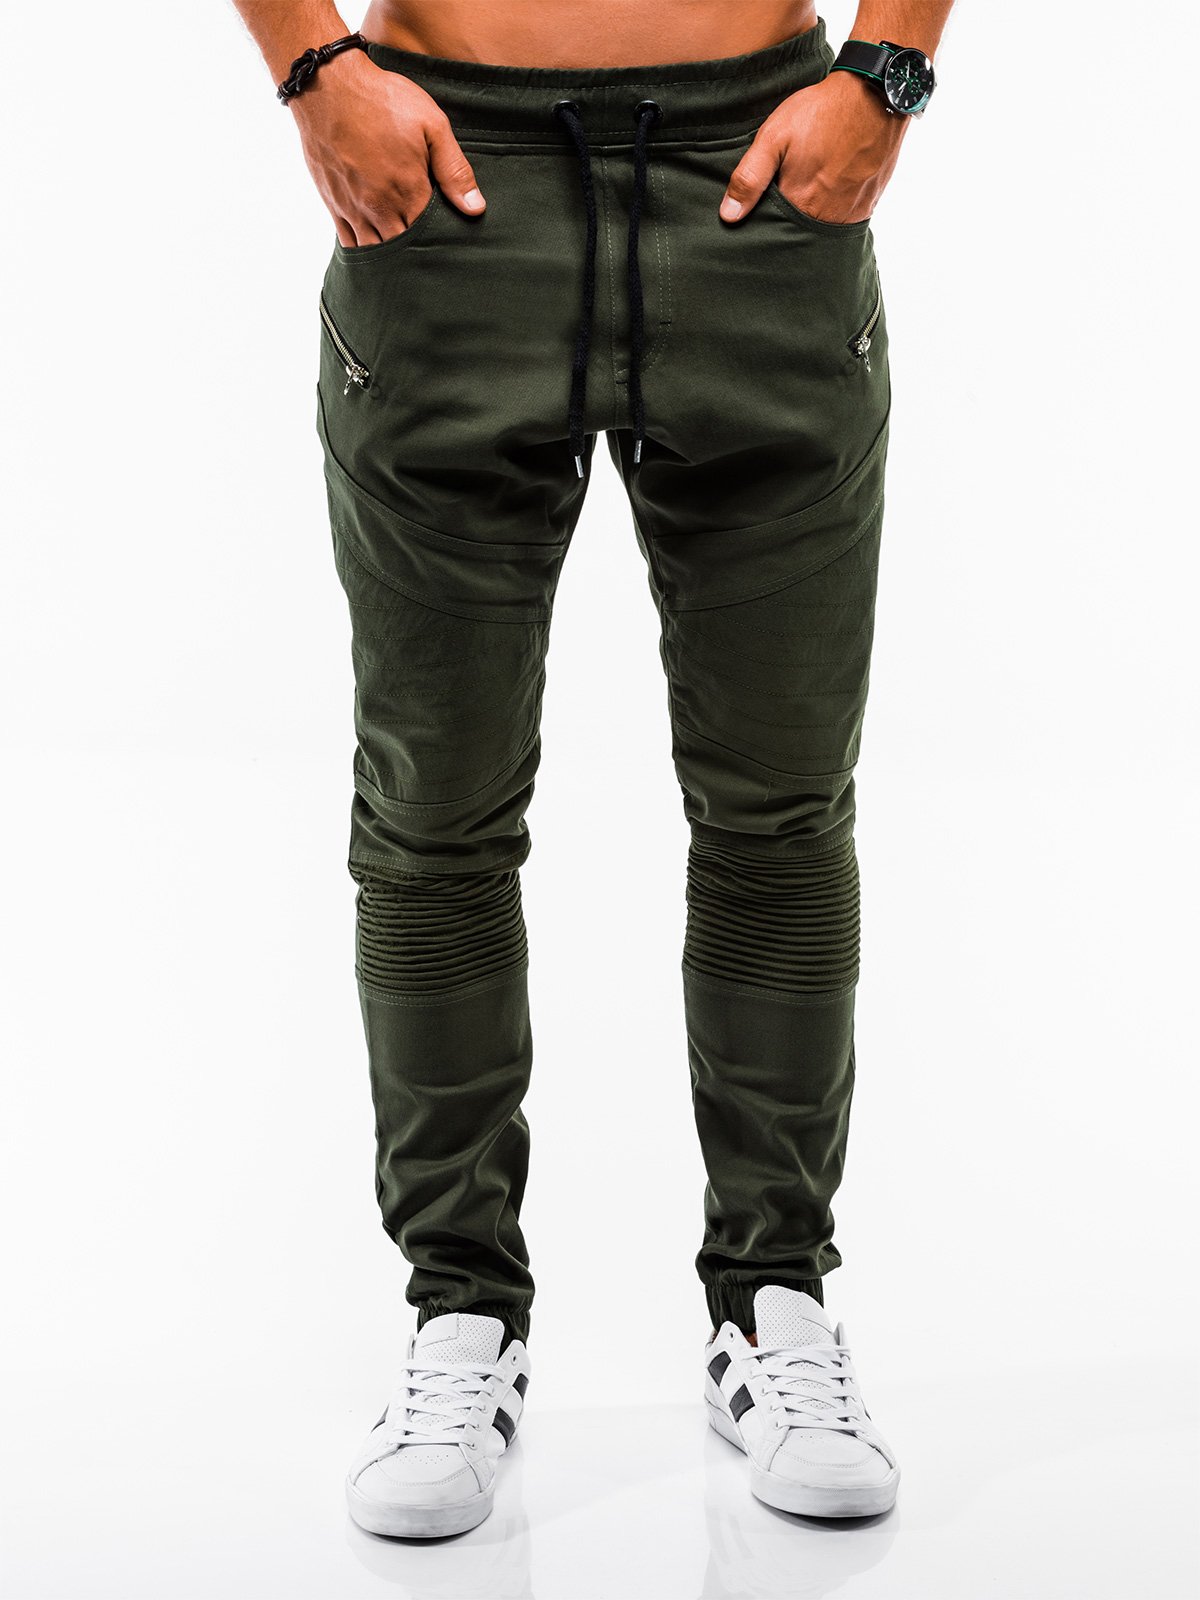 Men's pants joggers P709 - khaki | MODONE wholesale - Clothing For Men